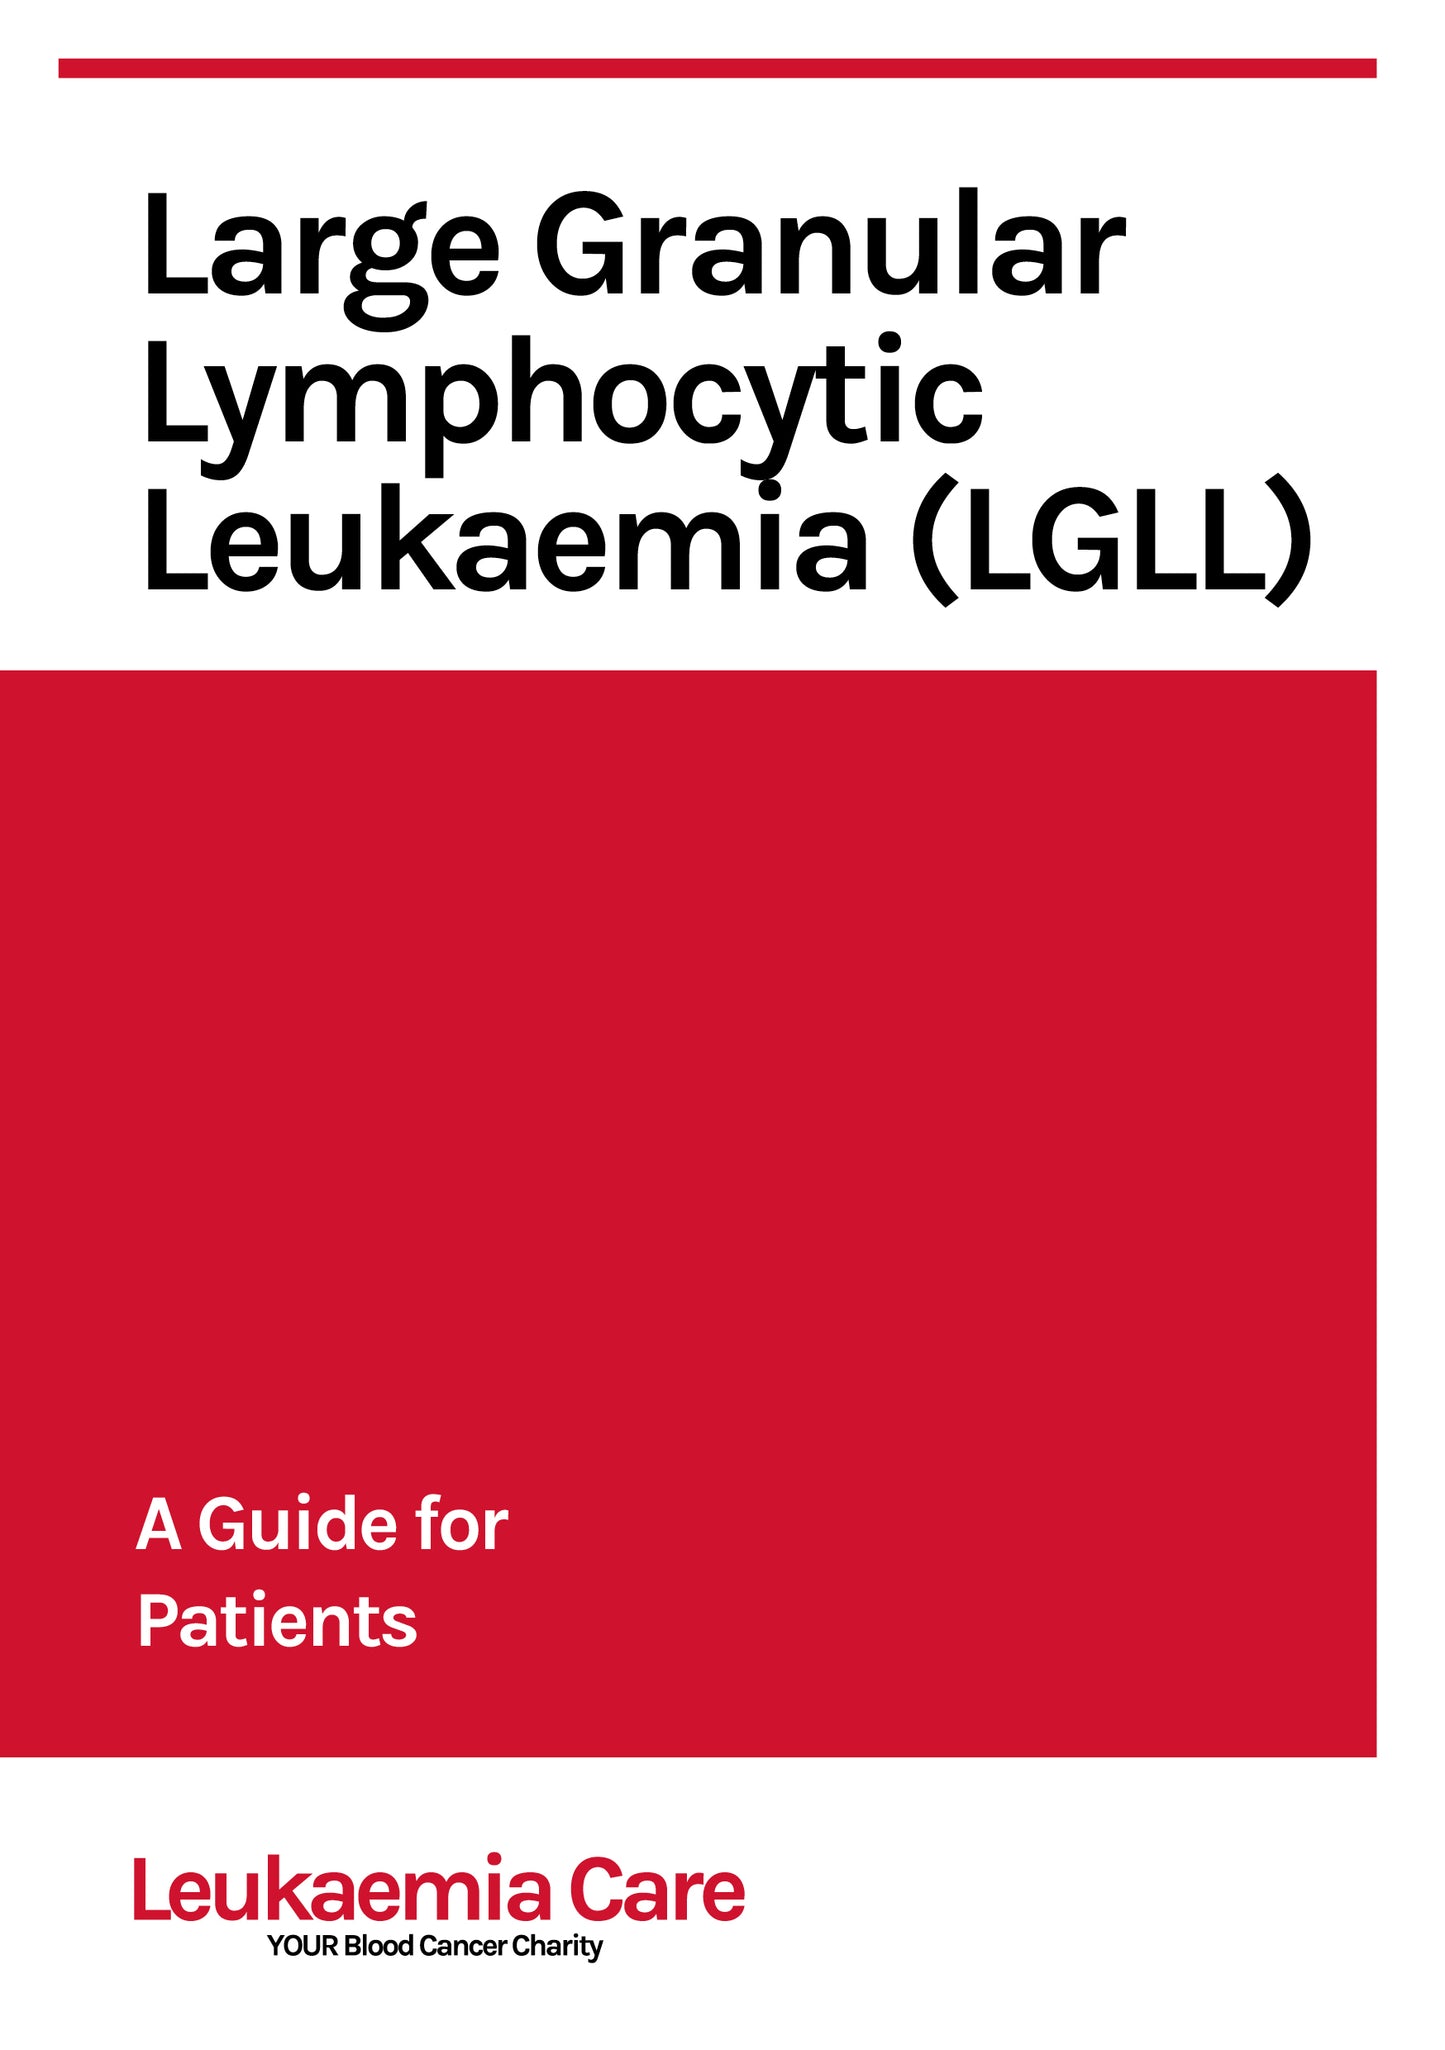 Large Granular Lymphocytic Leukaemia (LGLL) Information Booklet